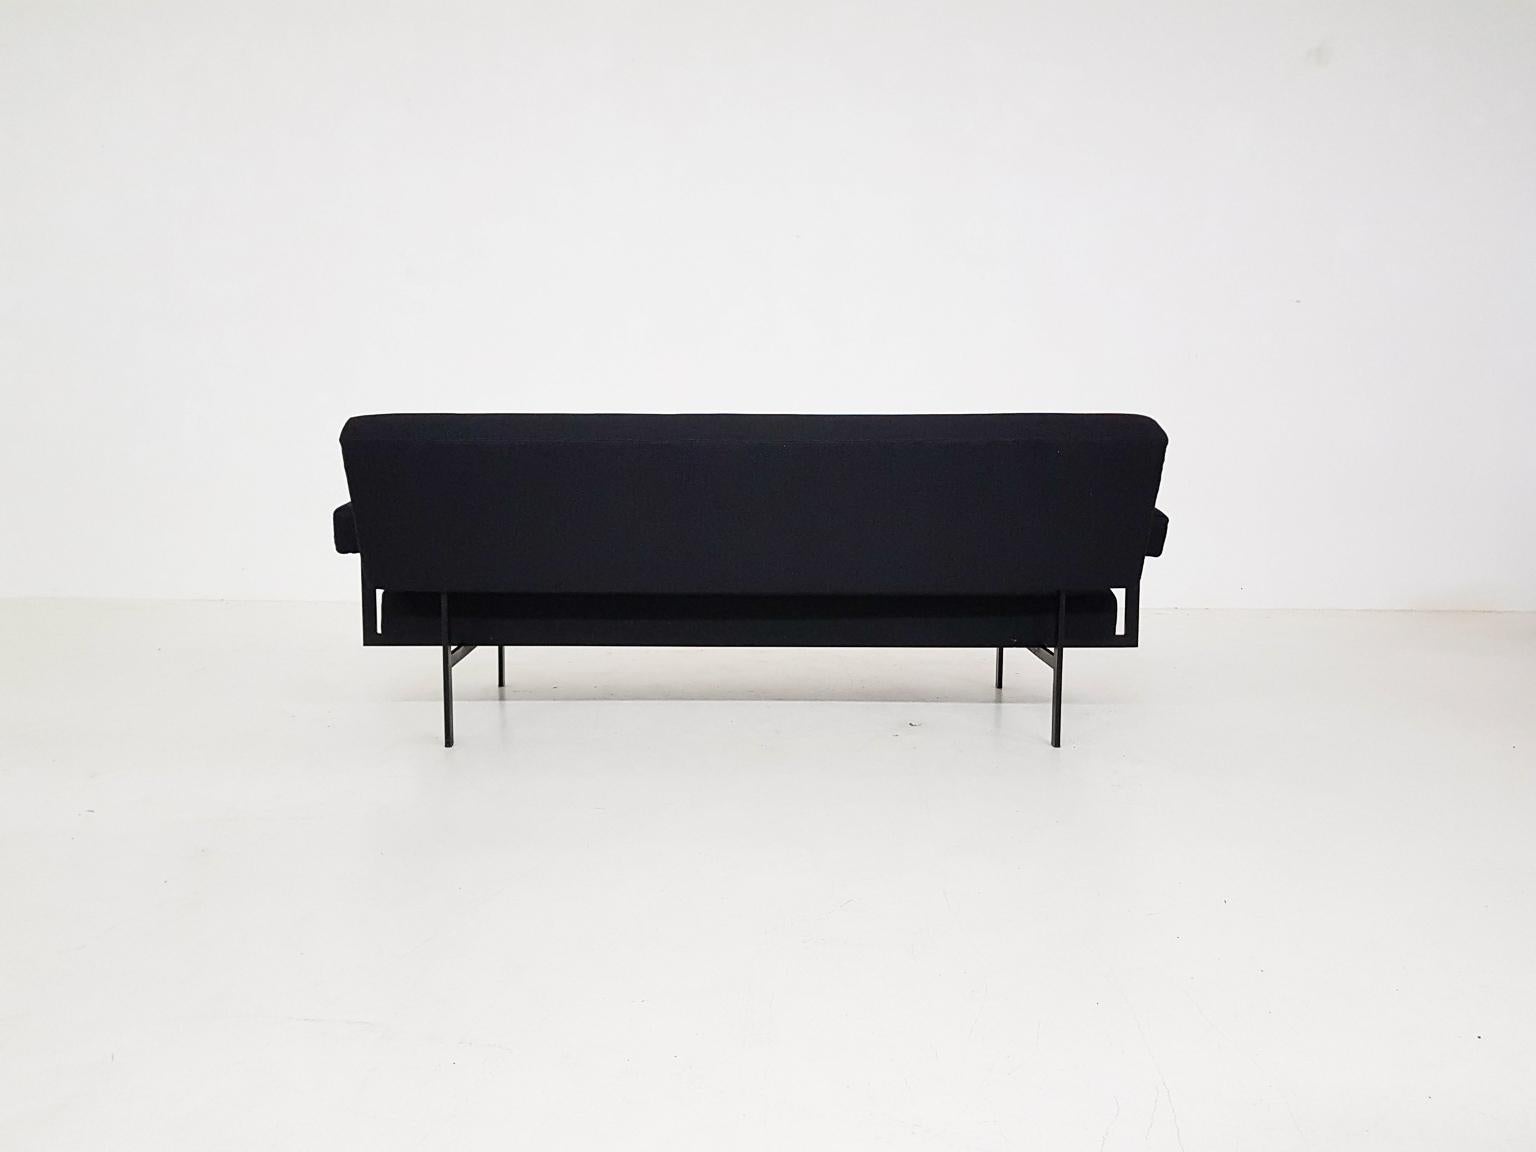 Mid-Century Modern Japanese Series MM07 Sofa by Cees Braakman for Pastoe, Dutch Modern Design, 1958